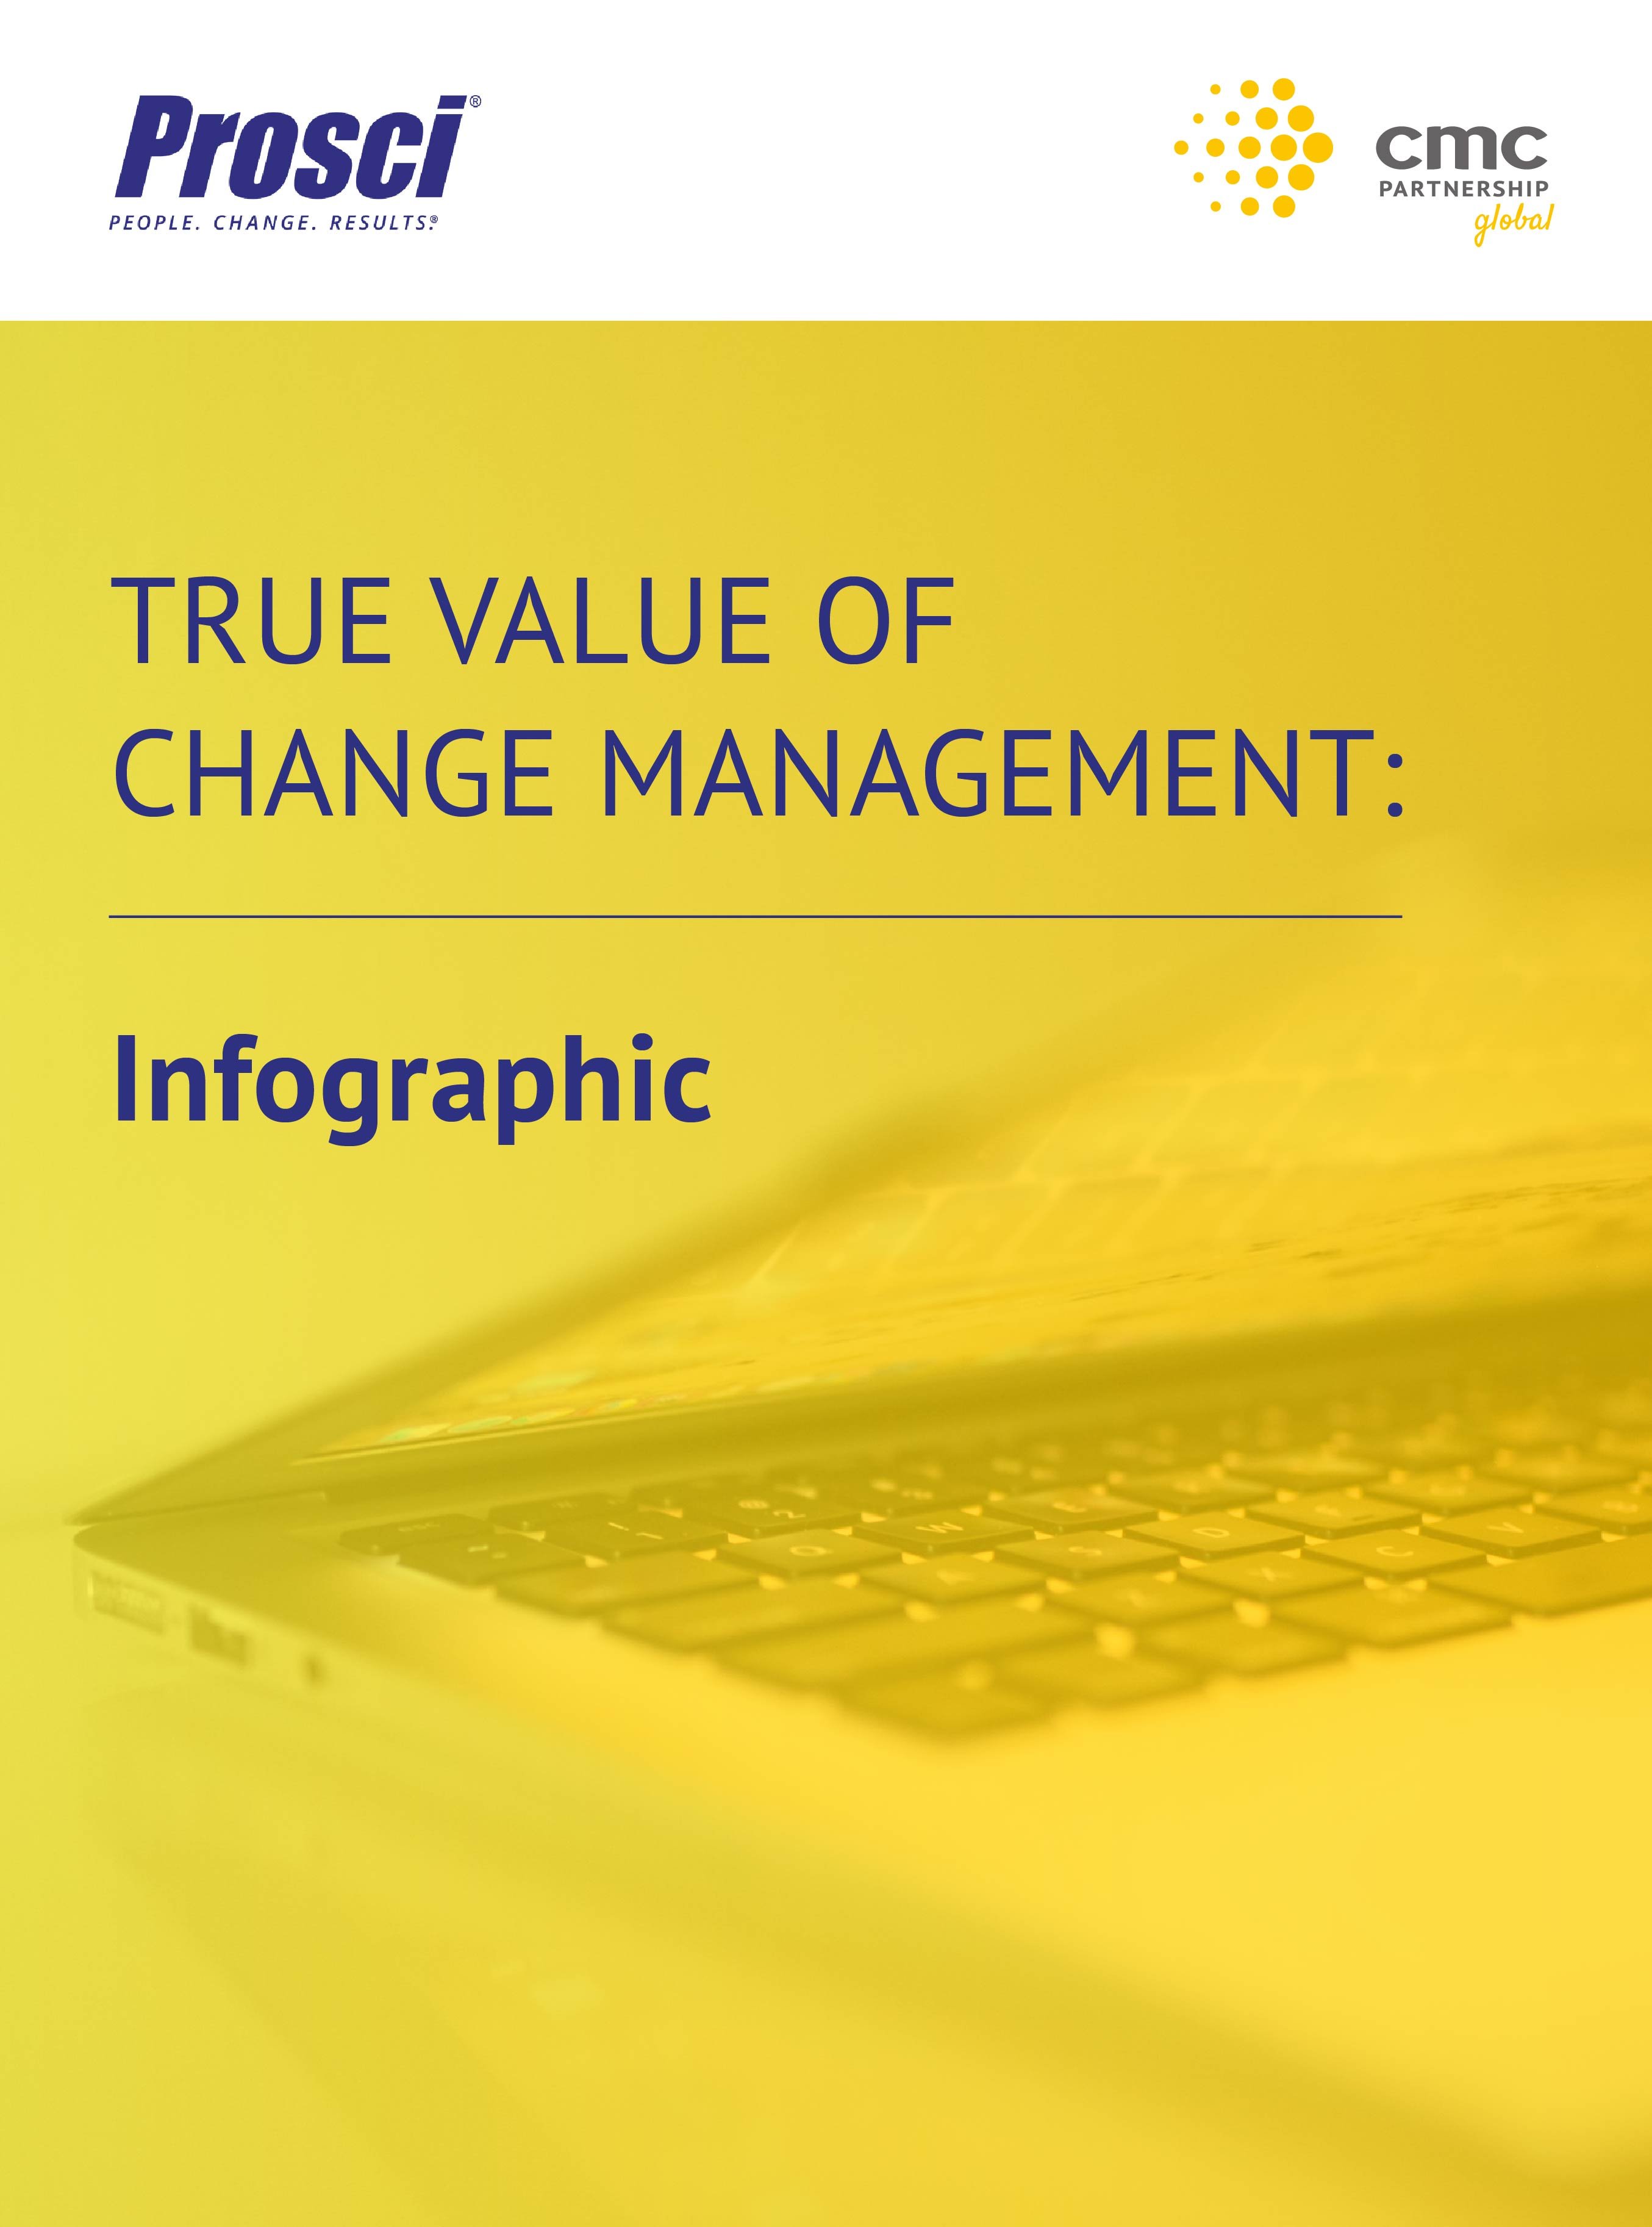 True Value of Change Management 2